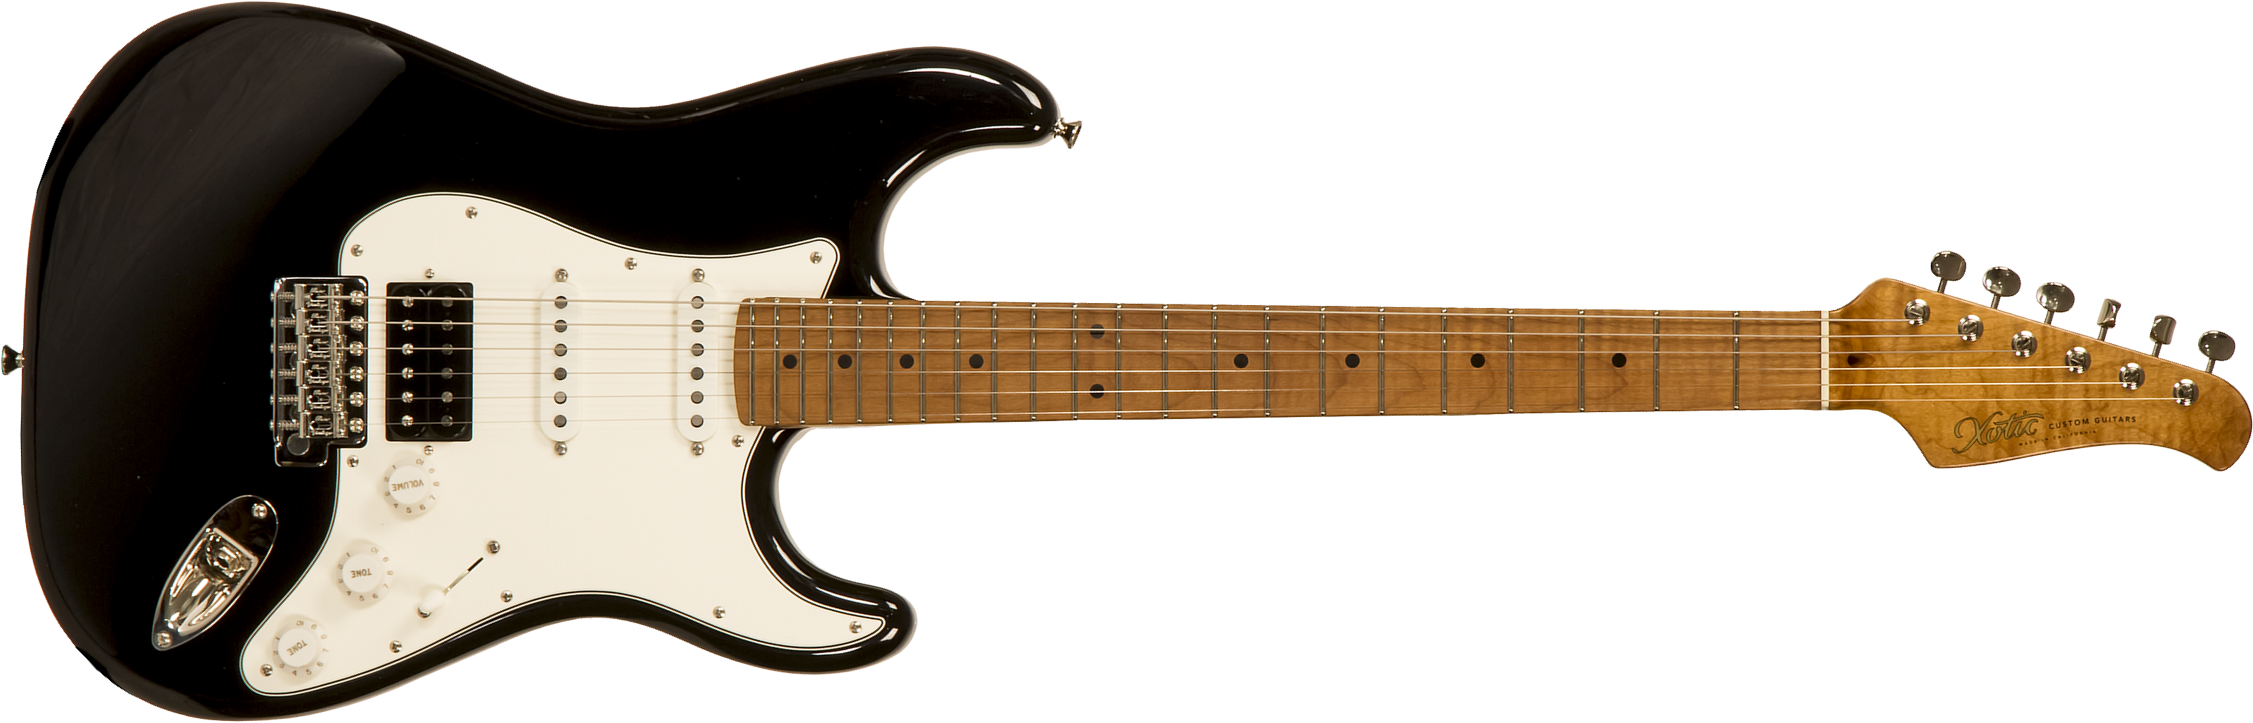 Xotic Xscpro-2 California Class Hss Mn #2113 - Light Aging Black - Guitarra eléctrica con forma de str. - Main picture